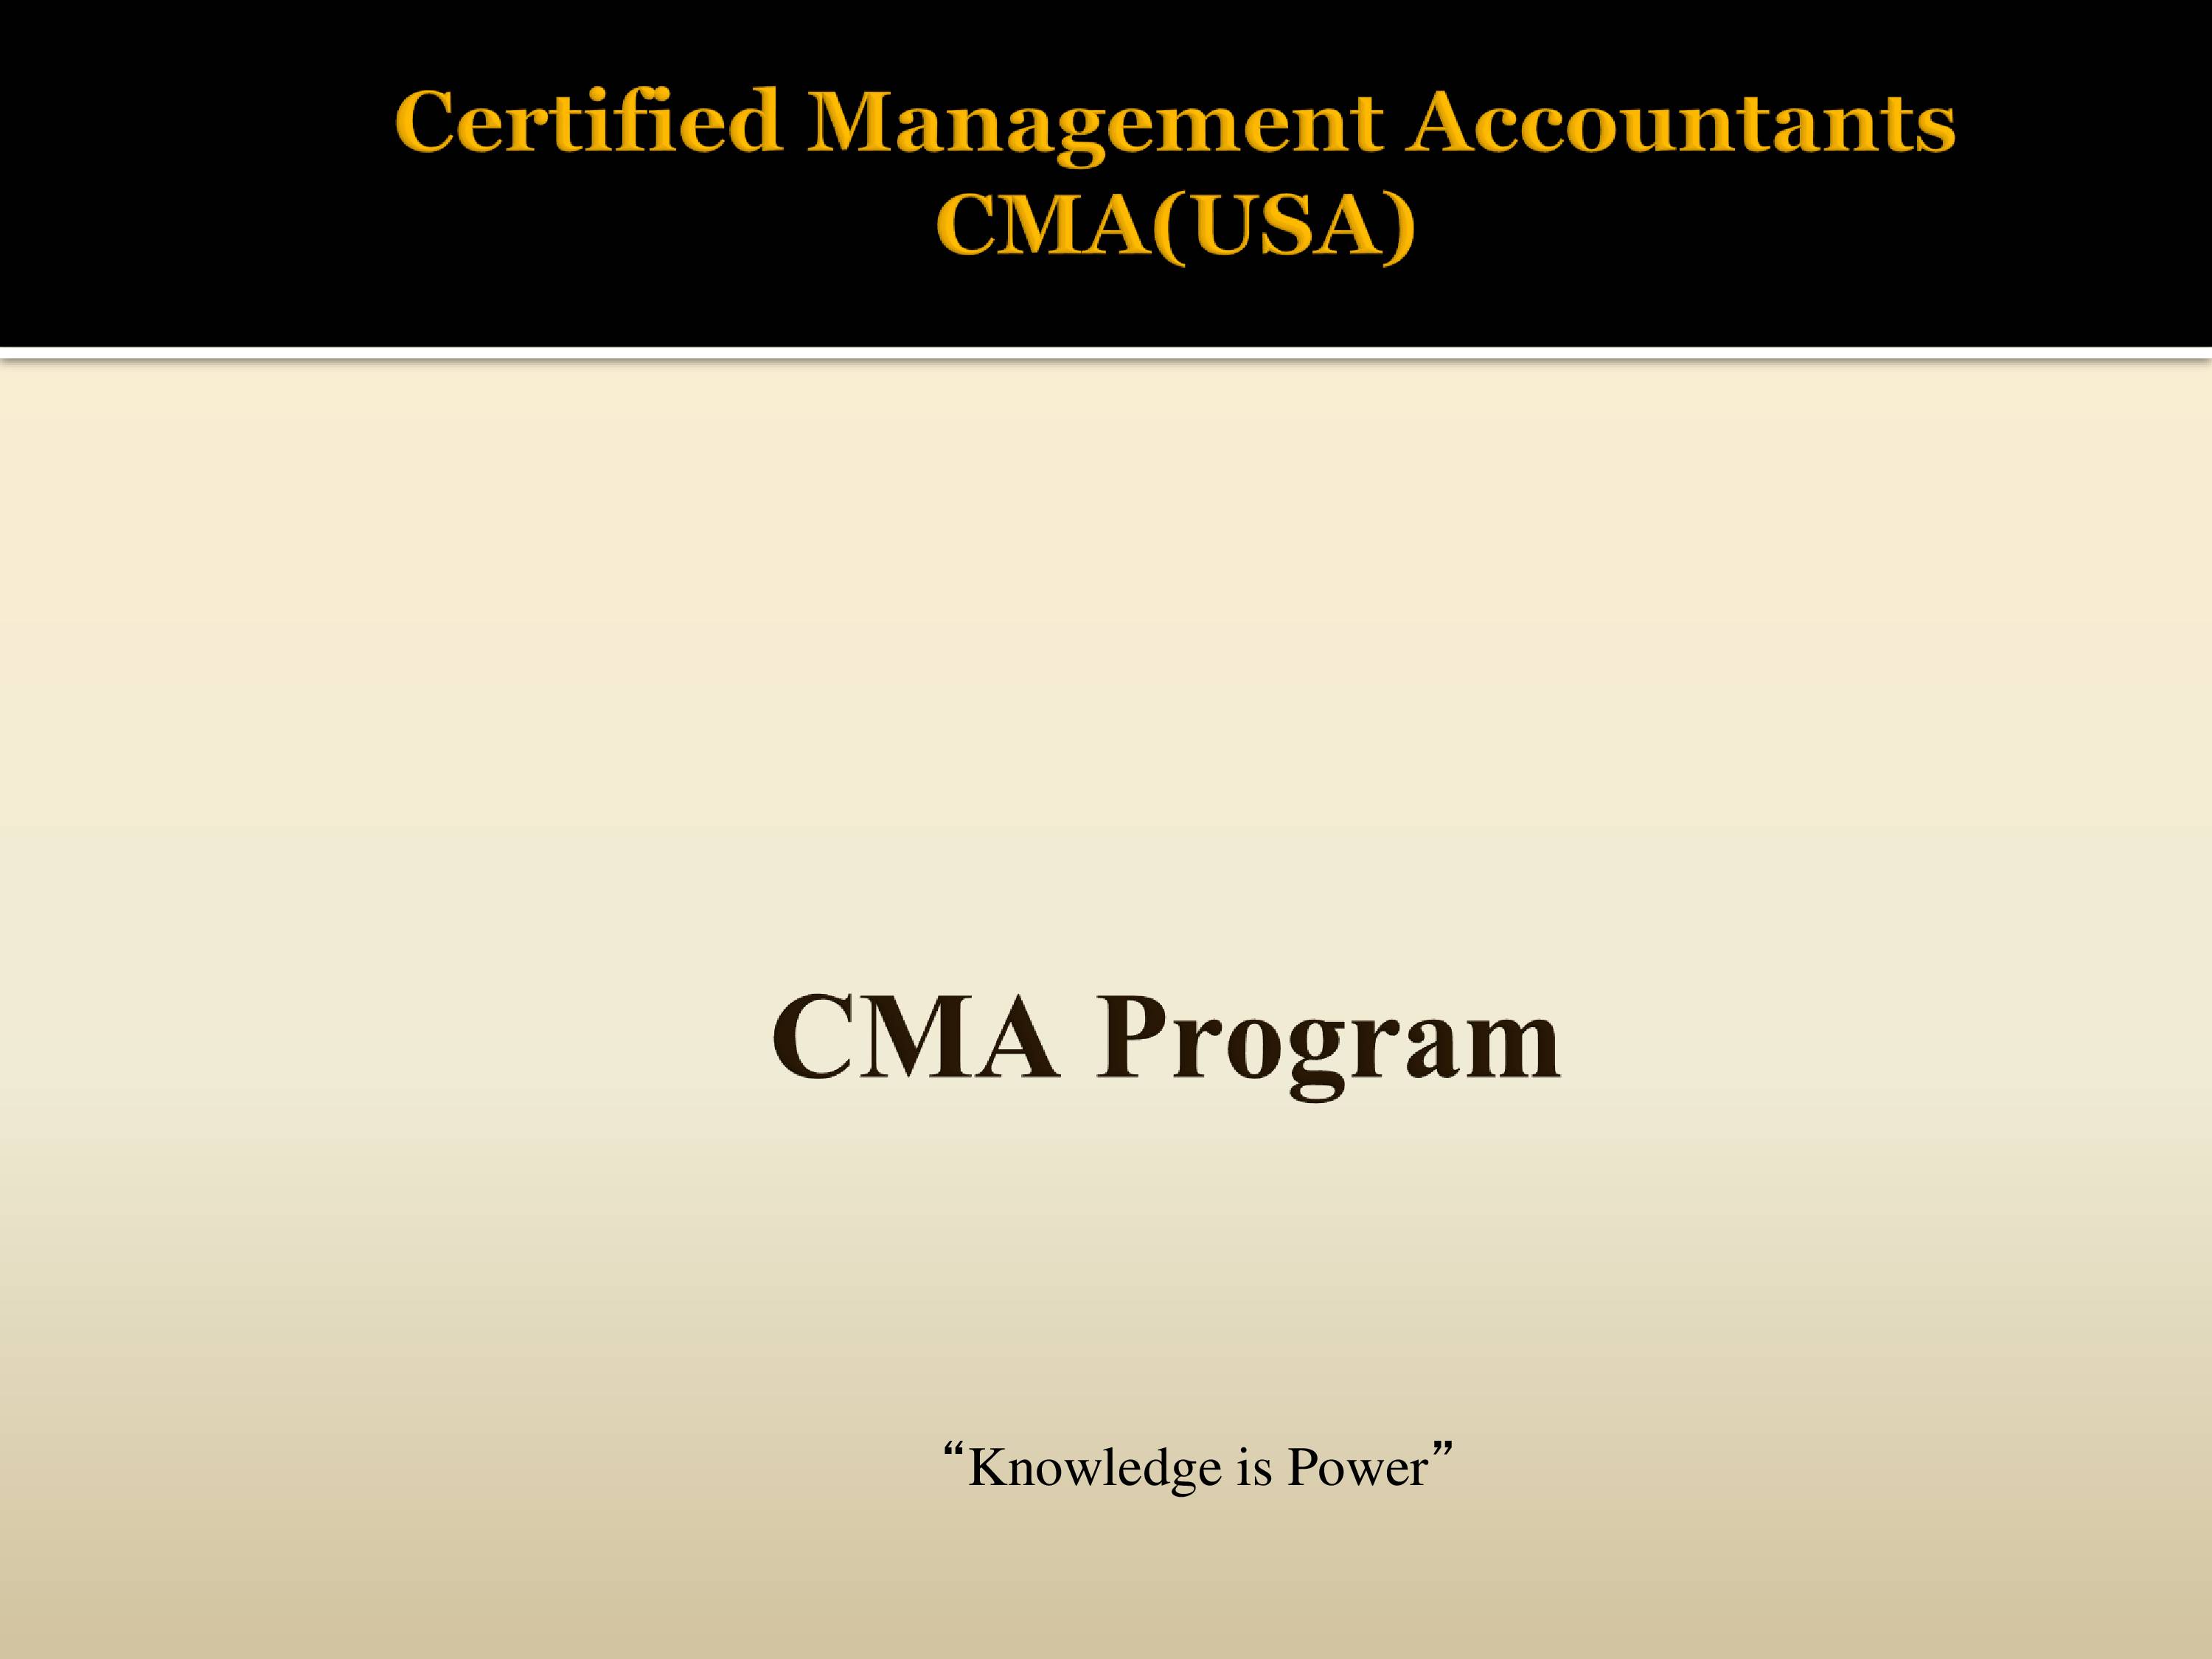 CMA(USA) Course Information